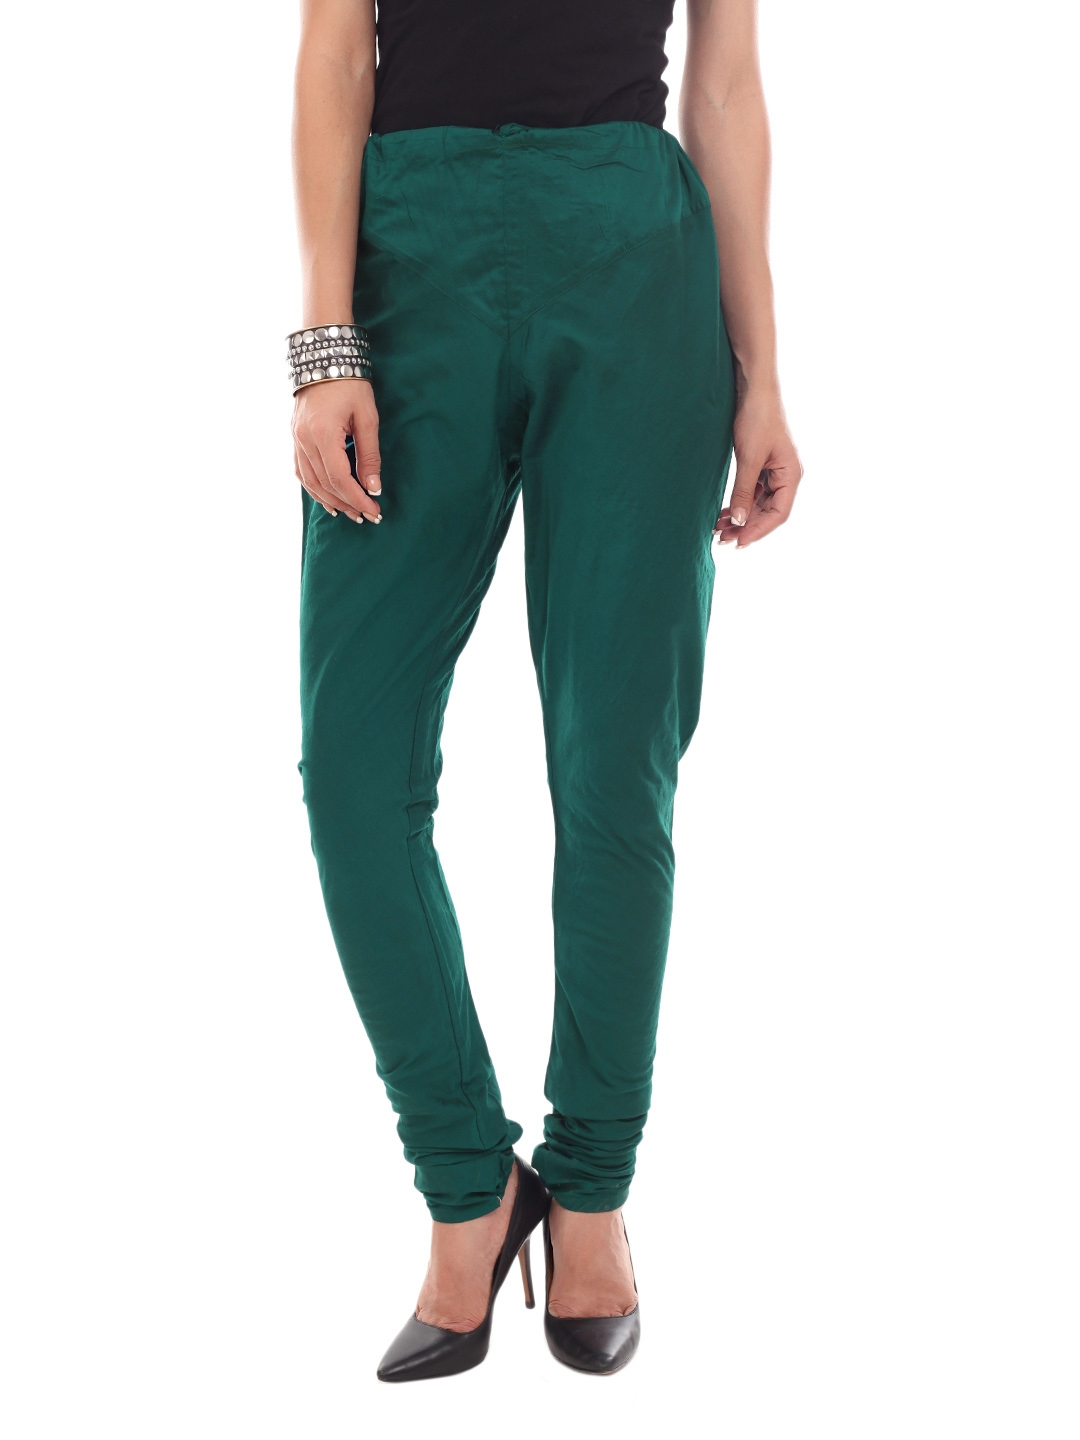 Buy Anahi Women Dark Green Churidar Pants - Churidar for Women